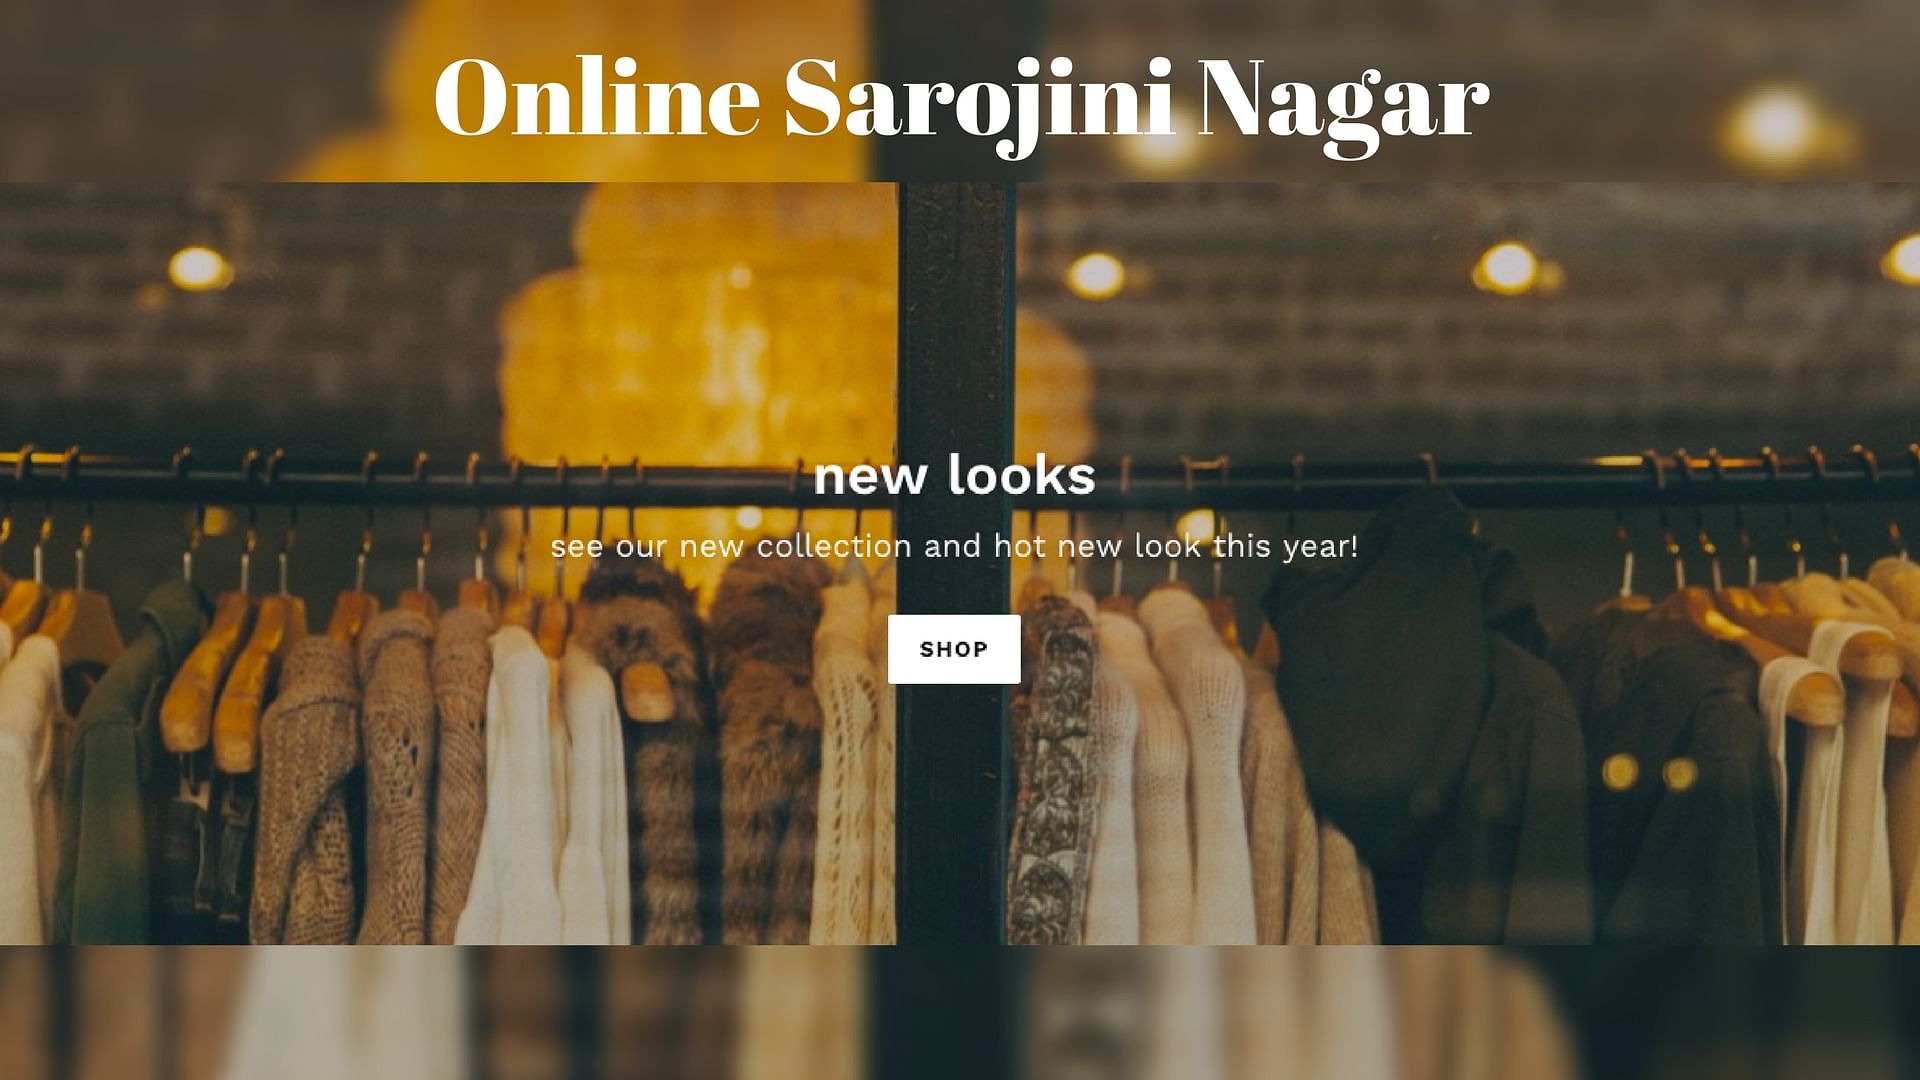 Sarojini Nagar is online now.